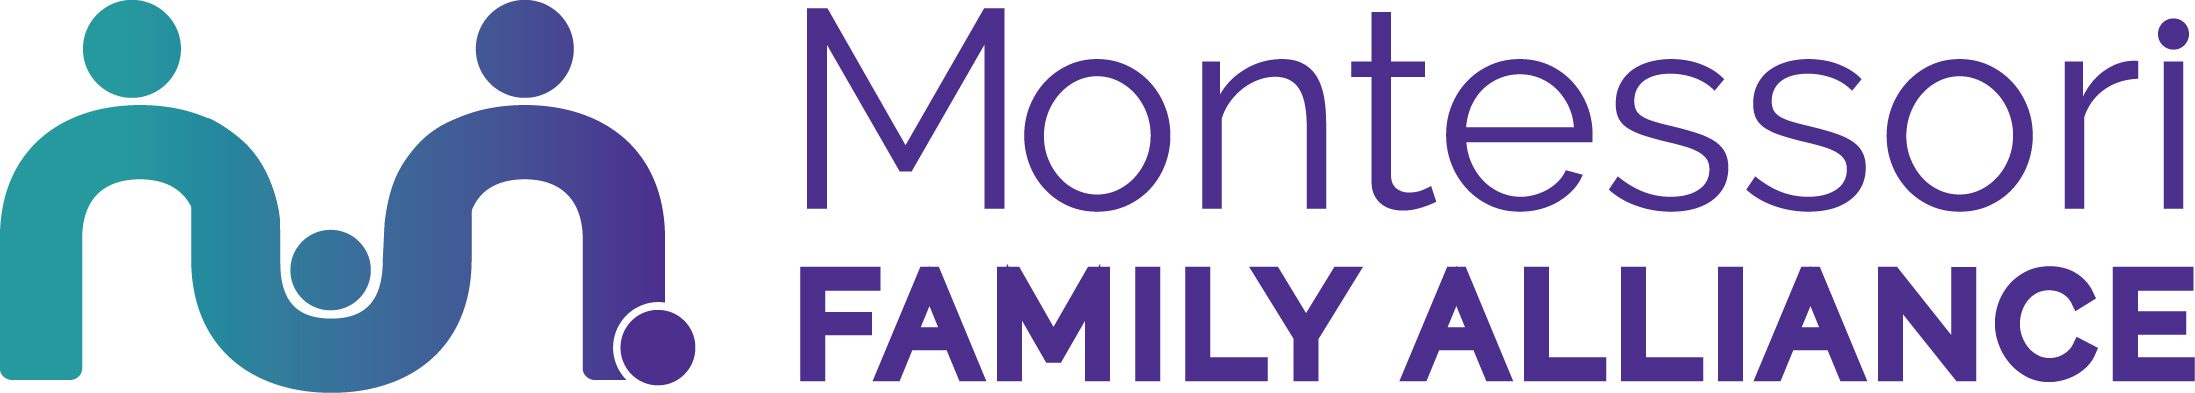 Montessori Family Alliance logo